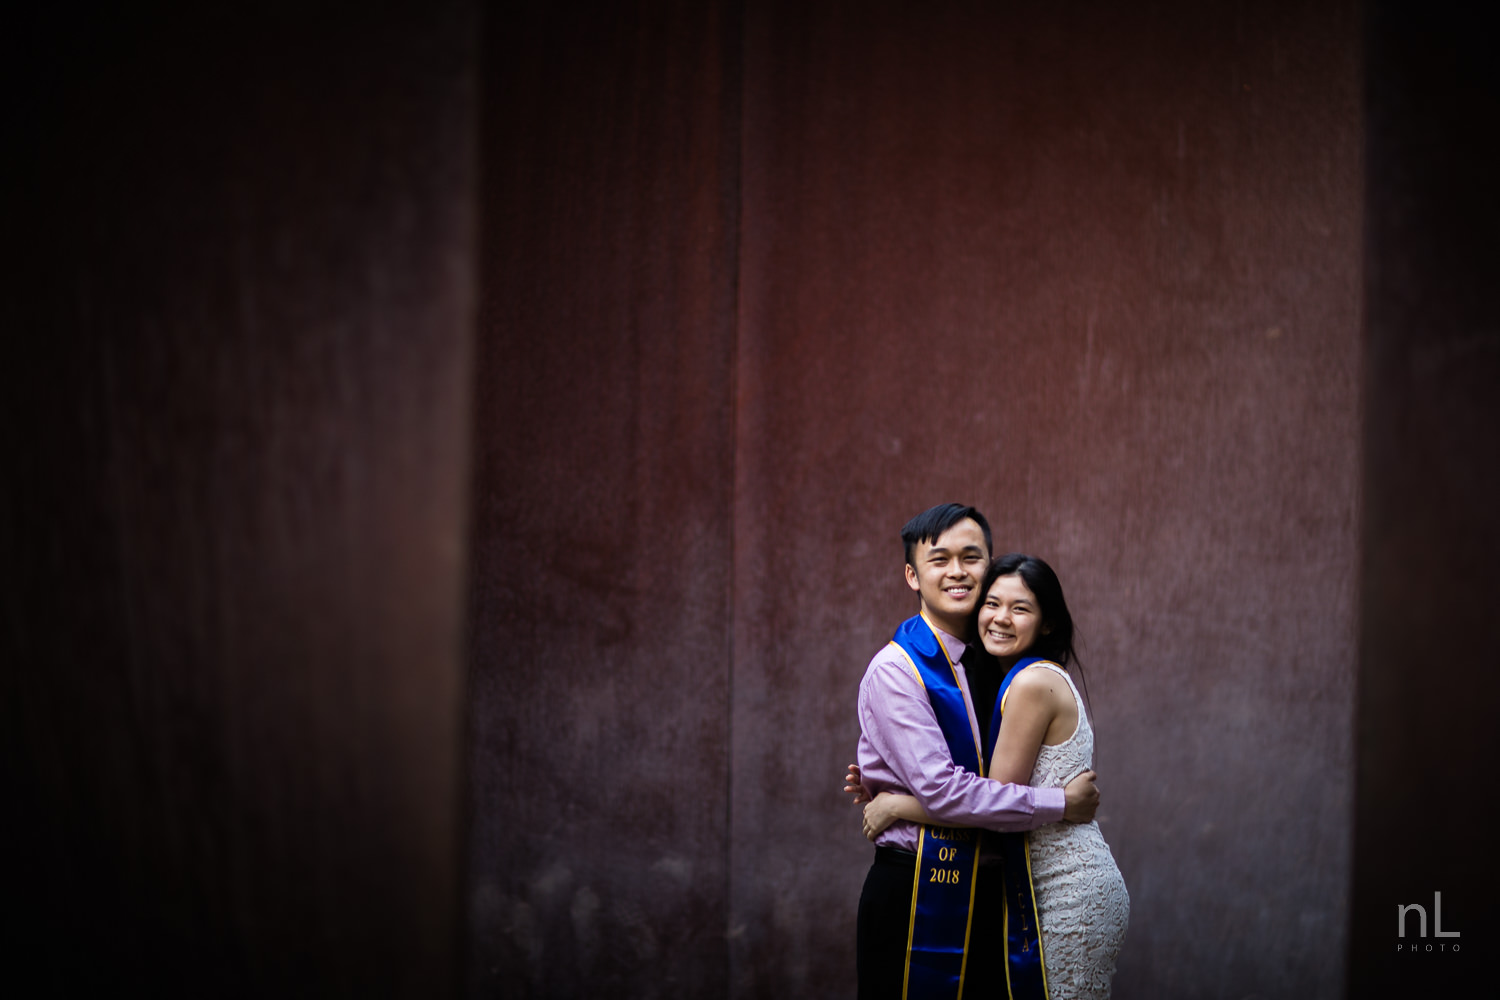 los-angeles-ucla-senior-graduation-portraits-couple-with-sashes-hugging